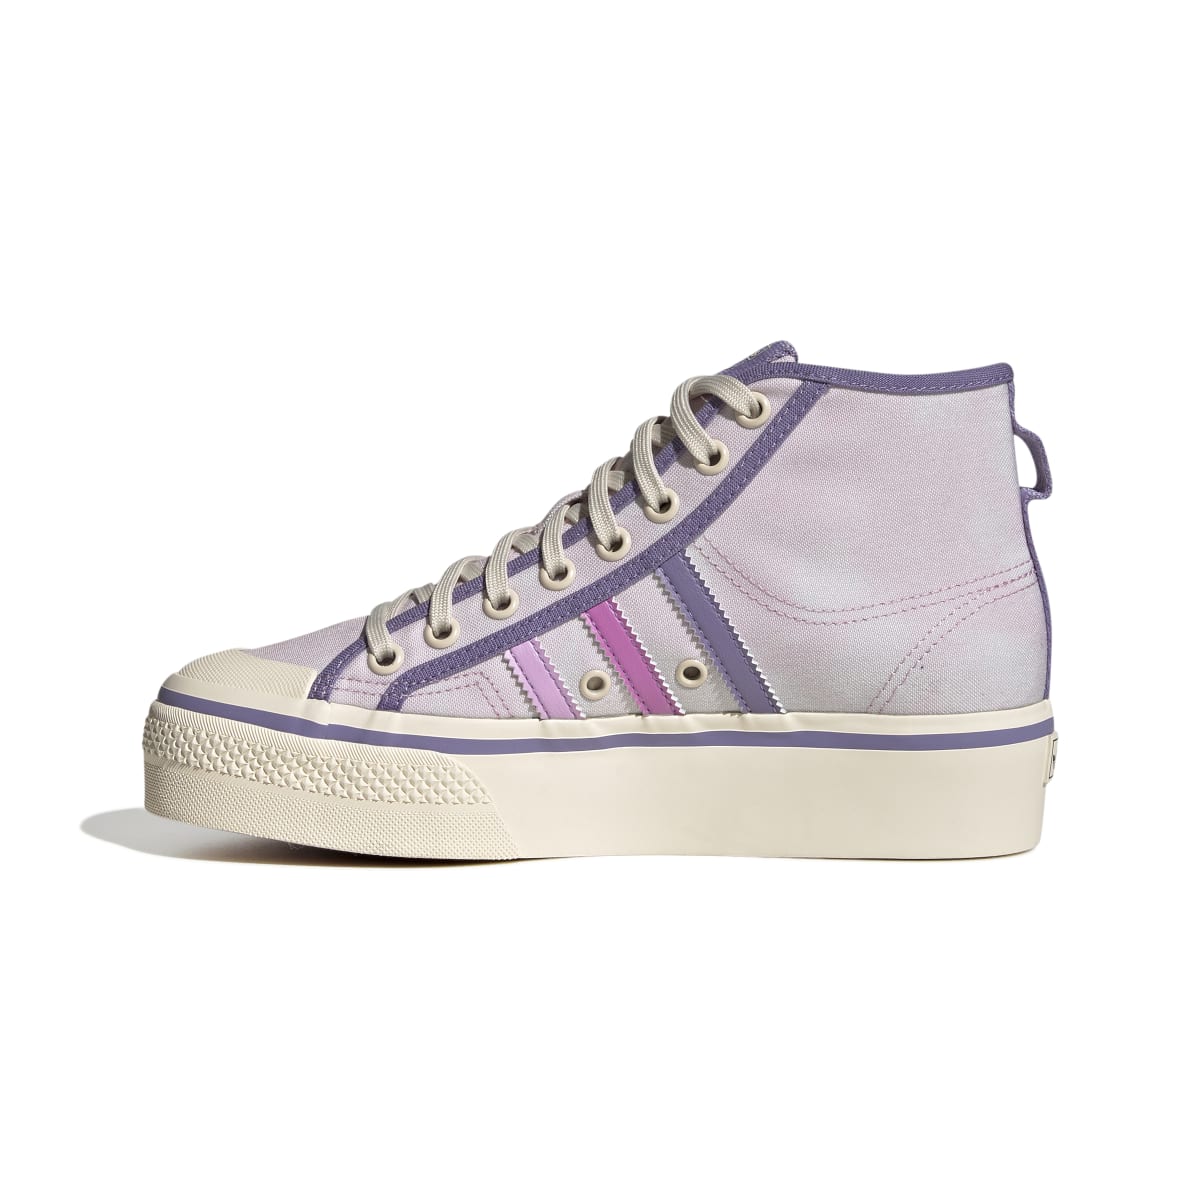 ADIDAS GX4608 NIZZA PLATFORM MID WMN'S (Medium) Pink/Lilac/White Textile Lifestyle Shoes